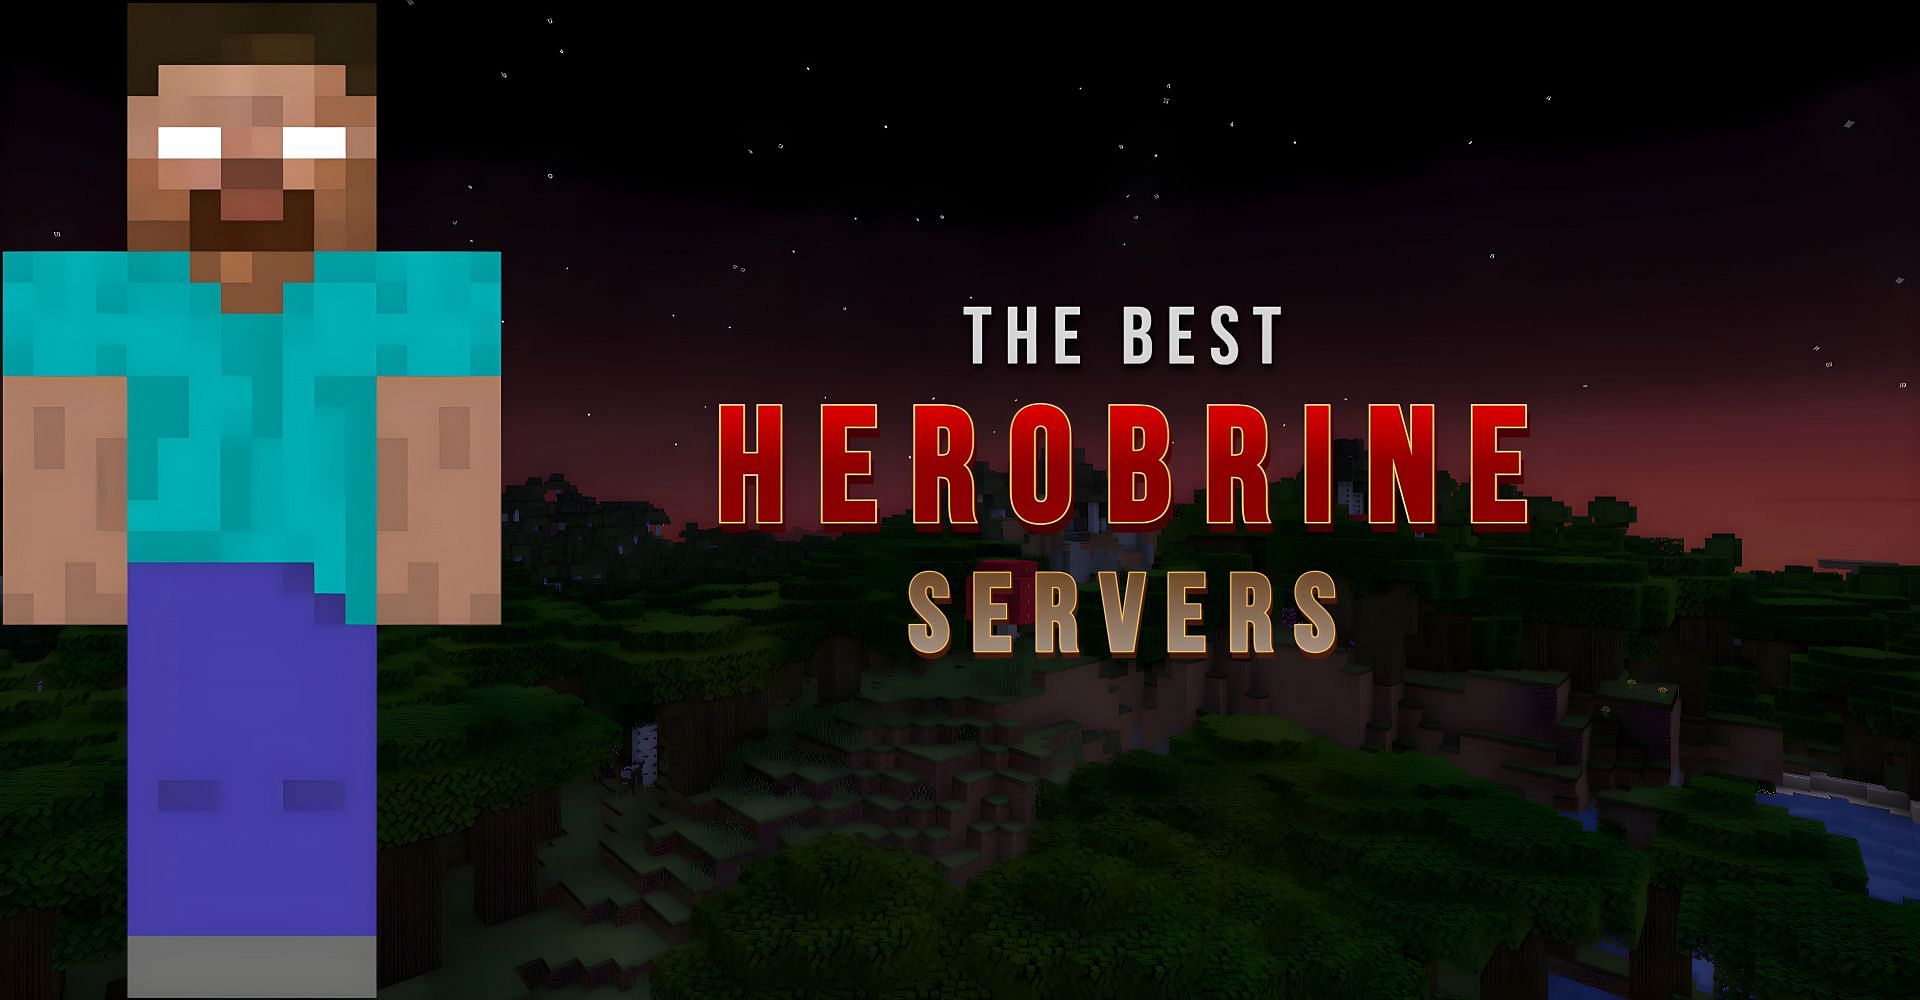 Herobrine servers in Minecraft are quite spooky (Image via Sportskeeda)